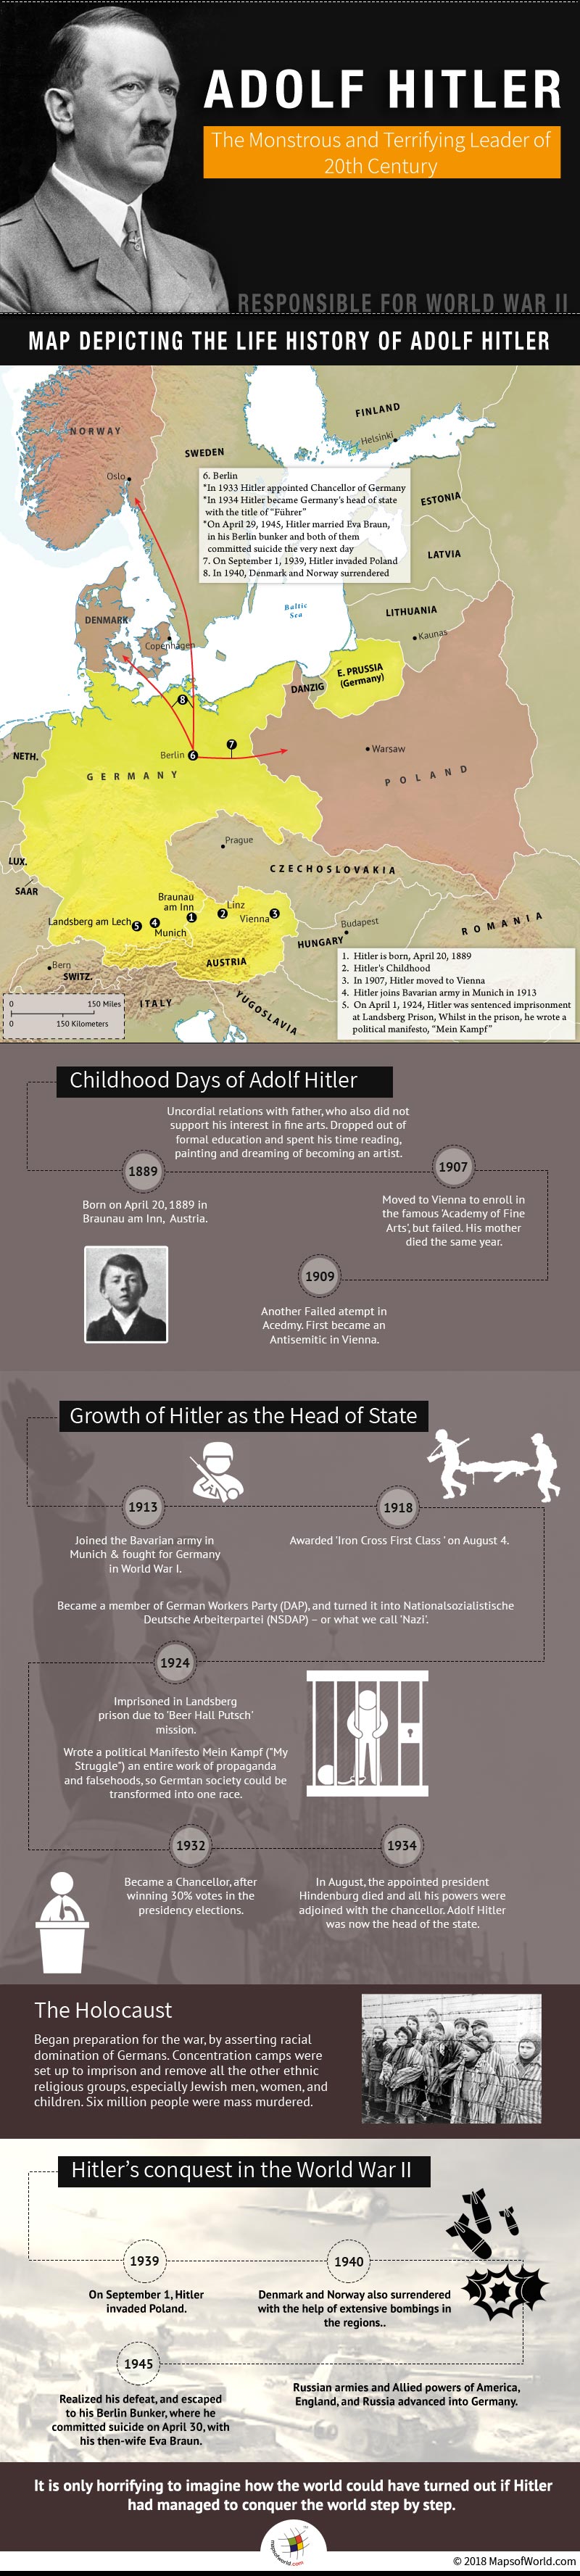 Infographic elaborating life of Adolf Hitler